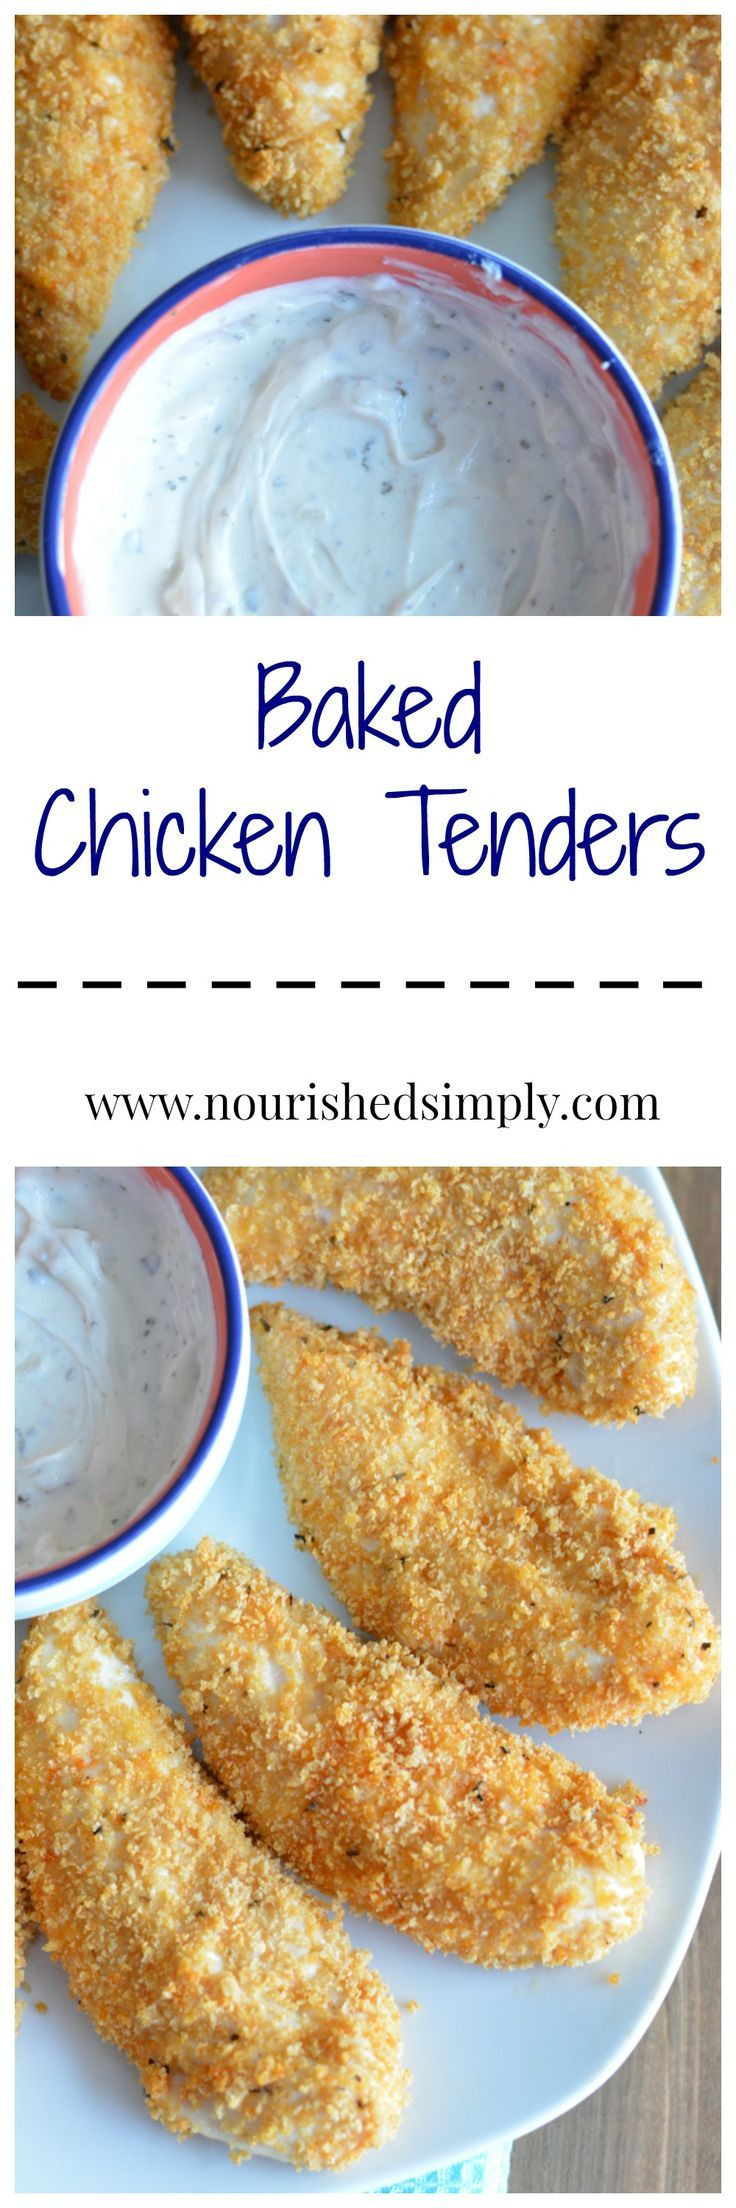 Healthy Frozen Chicken Tenders
 475 best images about Chicken on Pinterest